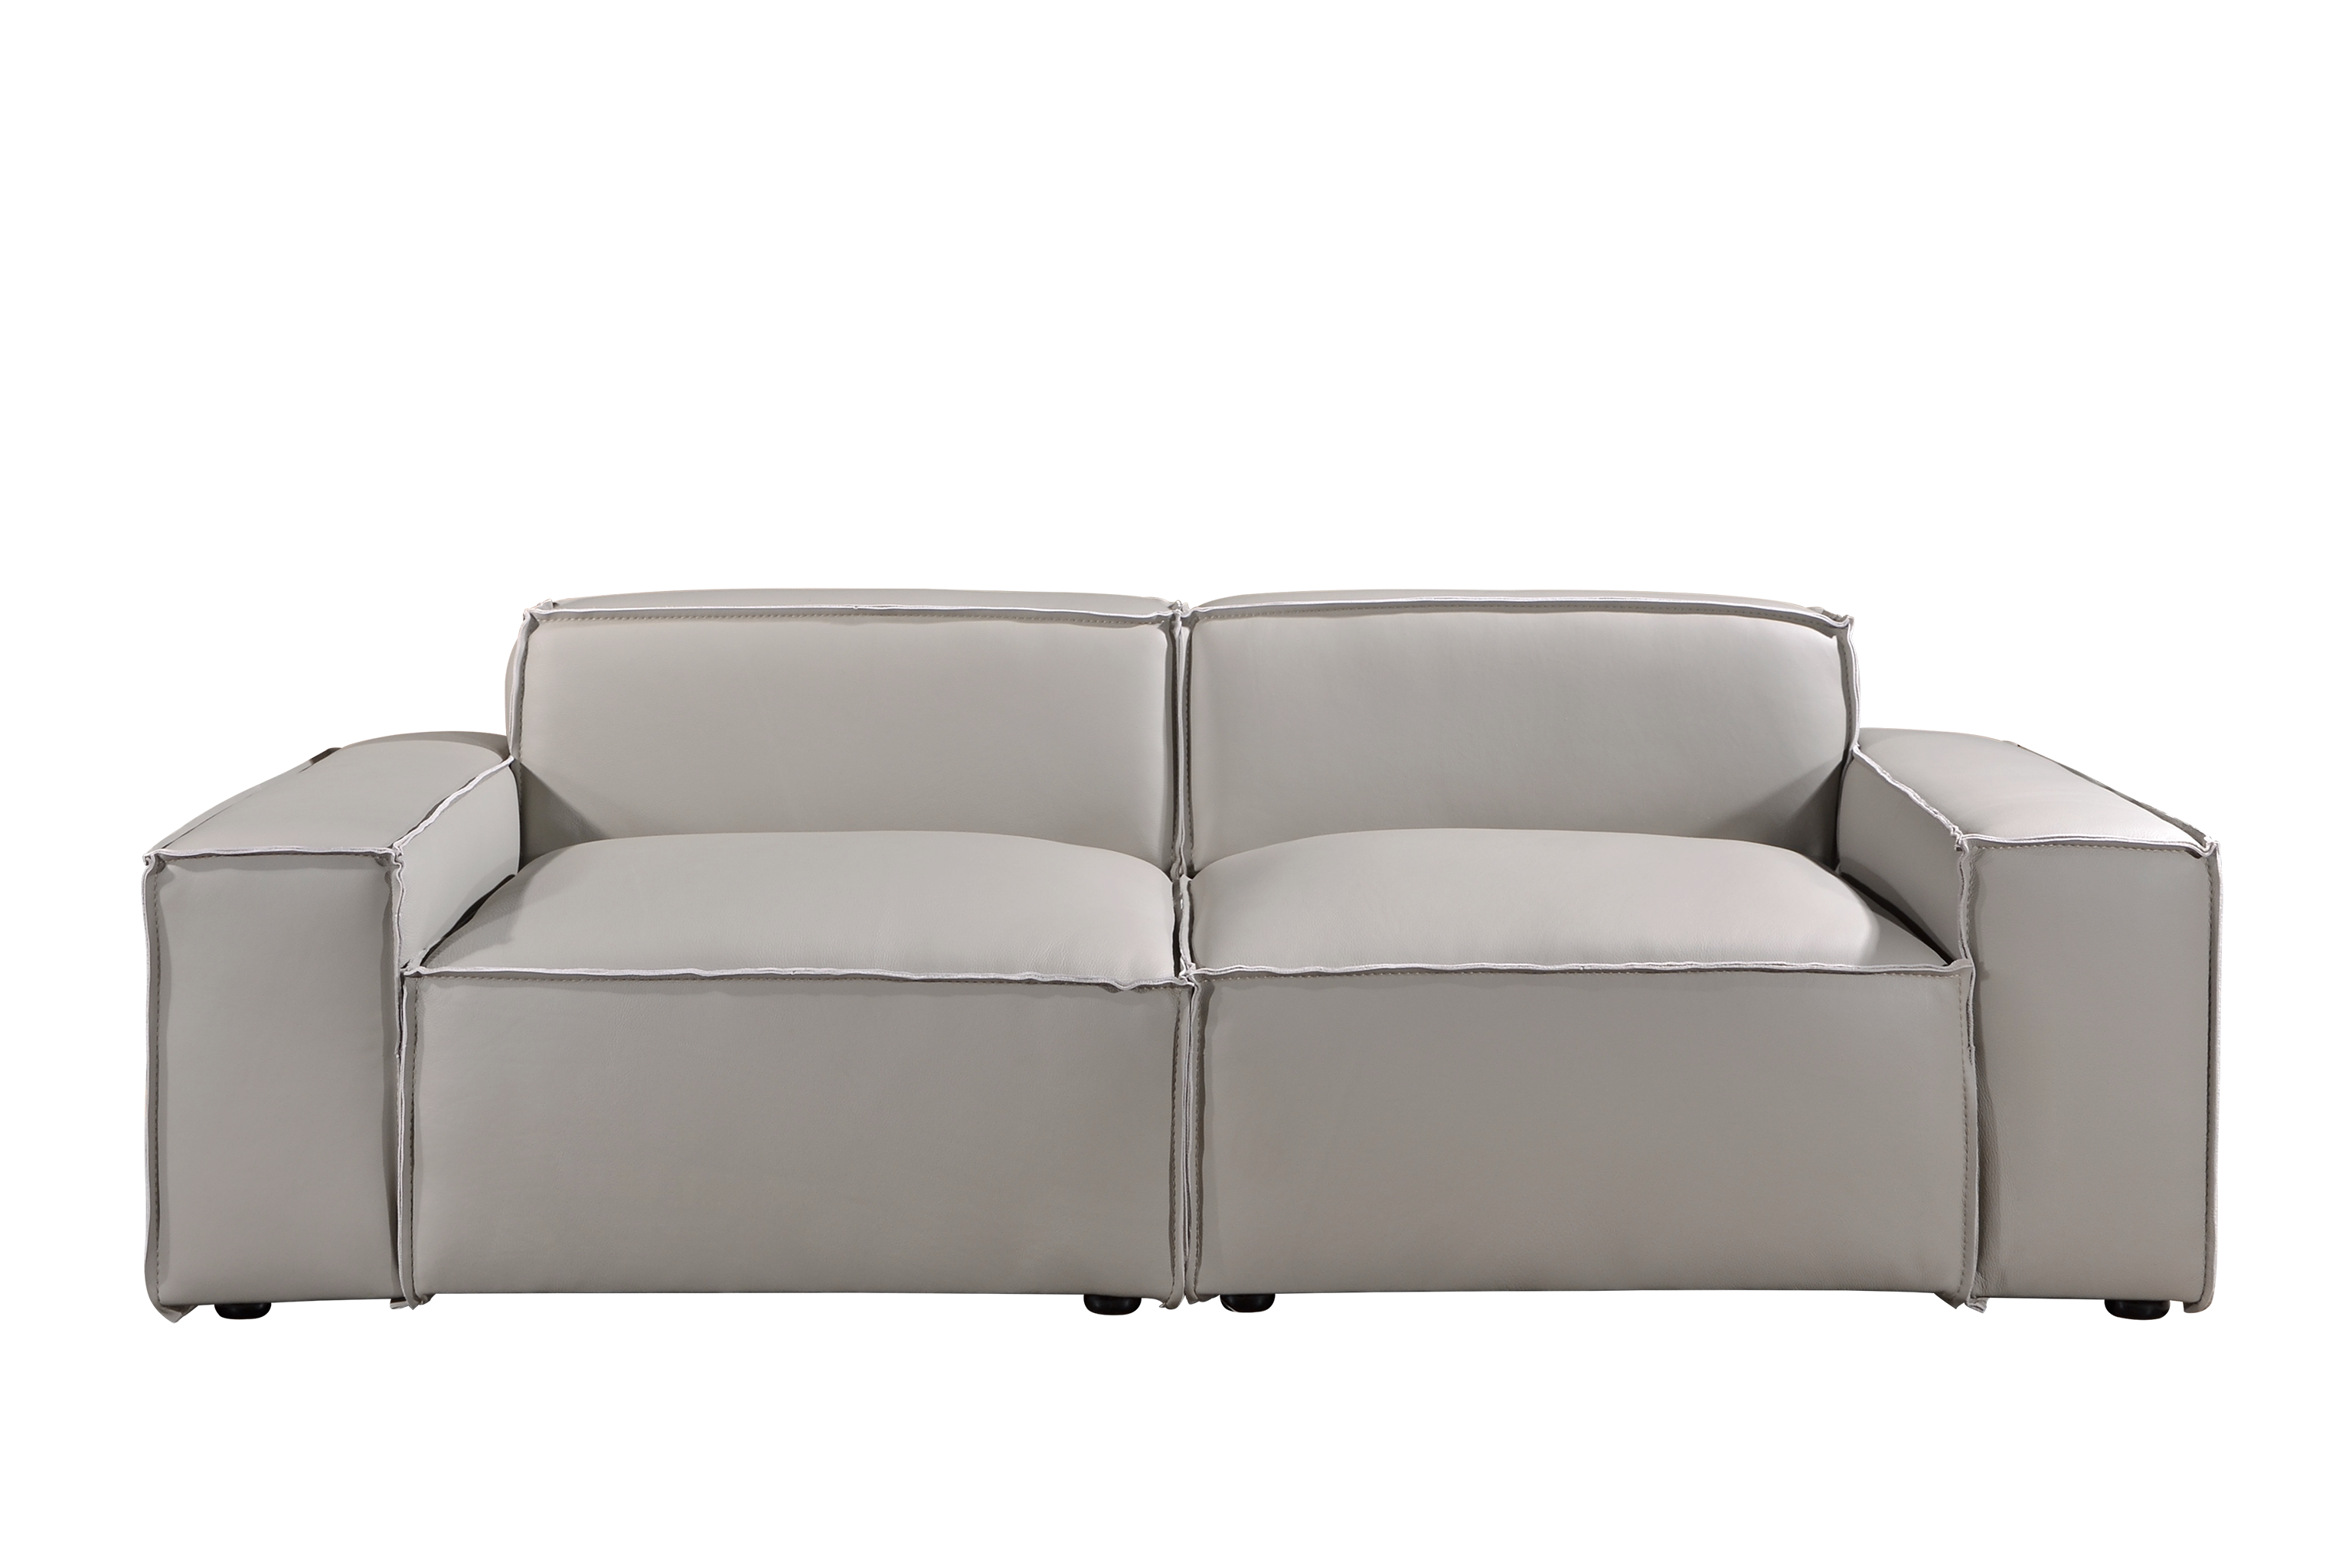 VALENTINA 2.5 Seater Sofa in Leather by Castilla